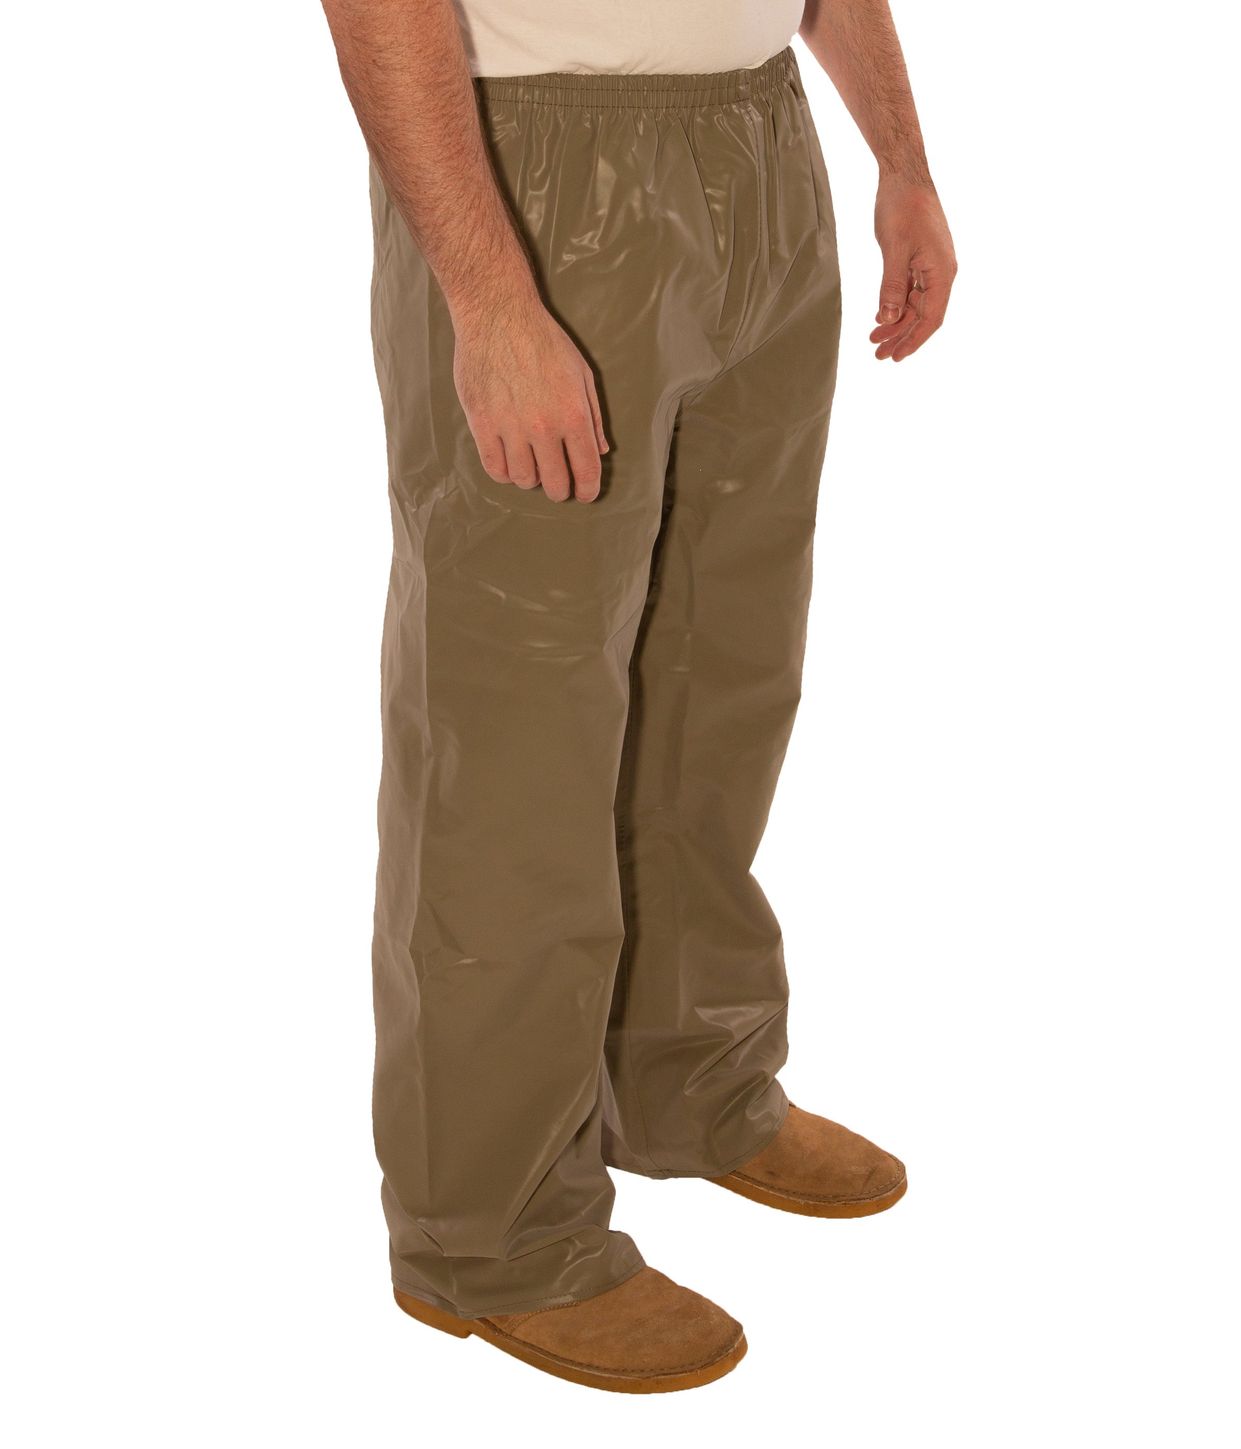 Mens Tricot Rain Pants - Size L, Huntworth | Agri Supply